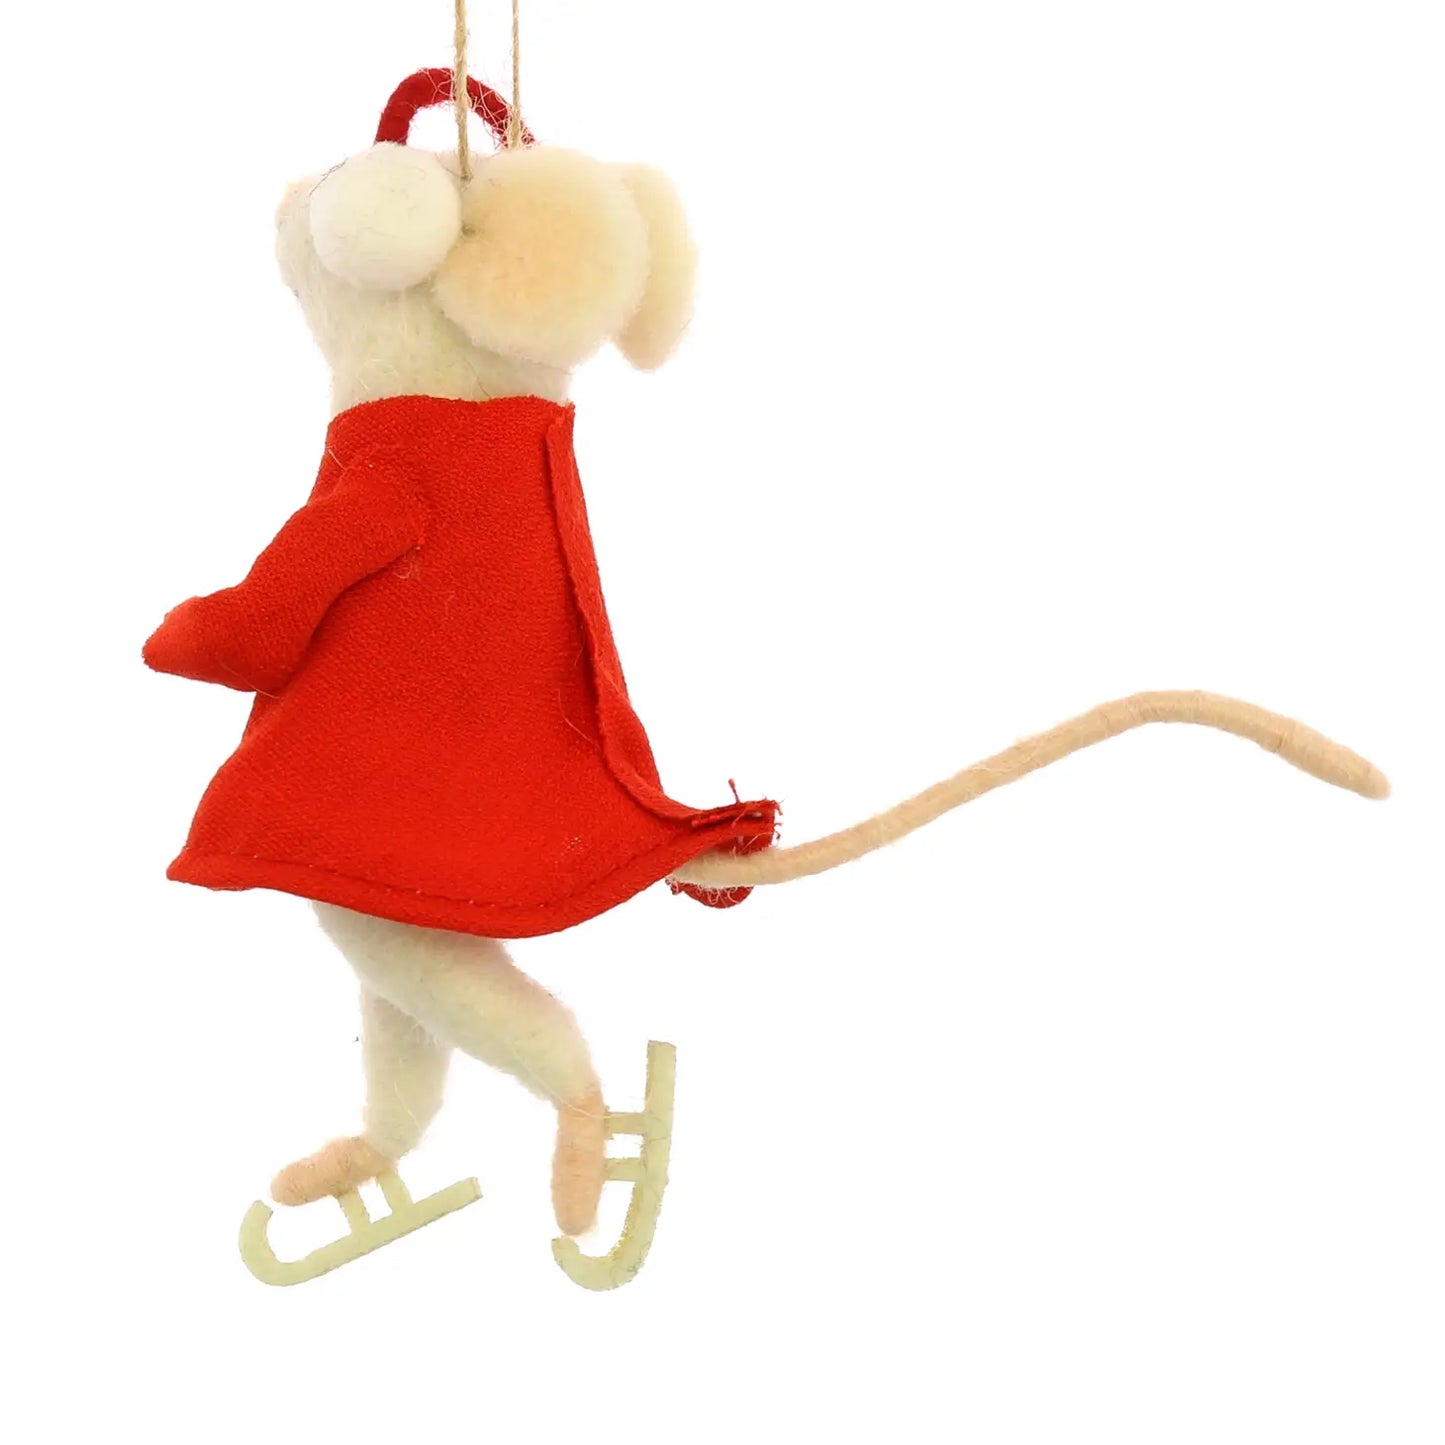 Figure Skating Mouse Felt Ornament